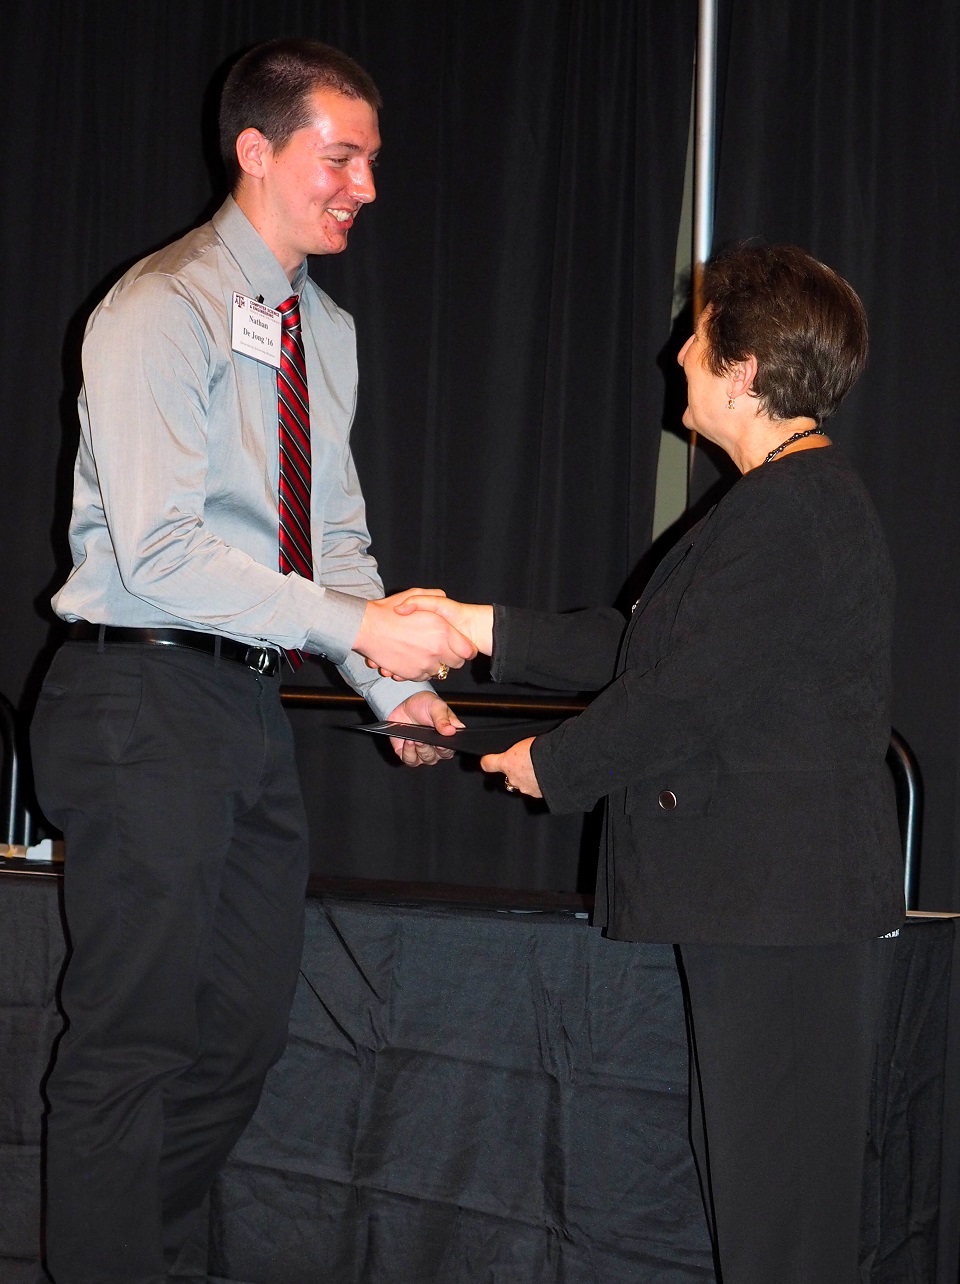 Spring 2016 student receiving award